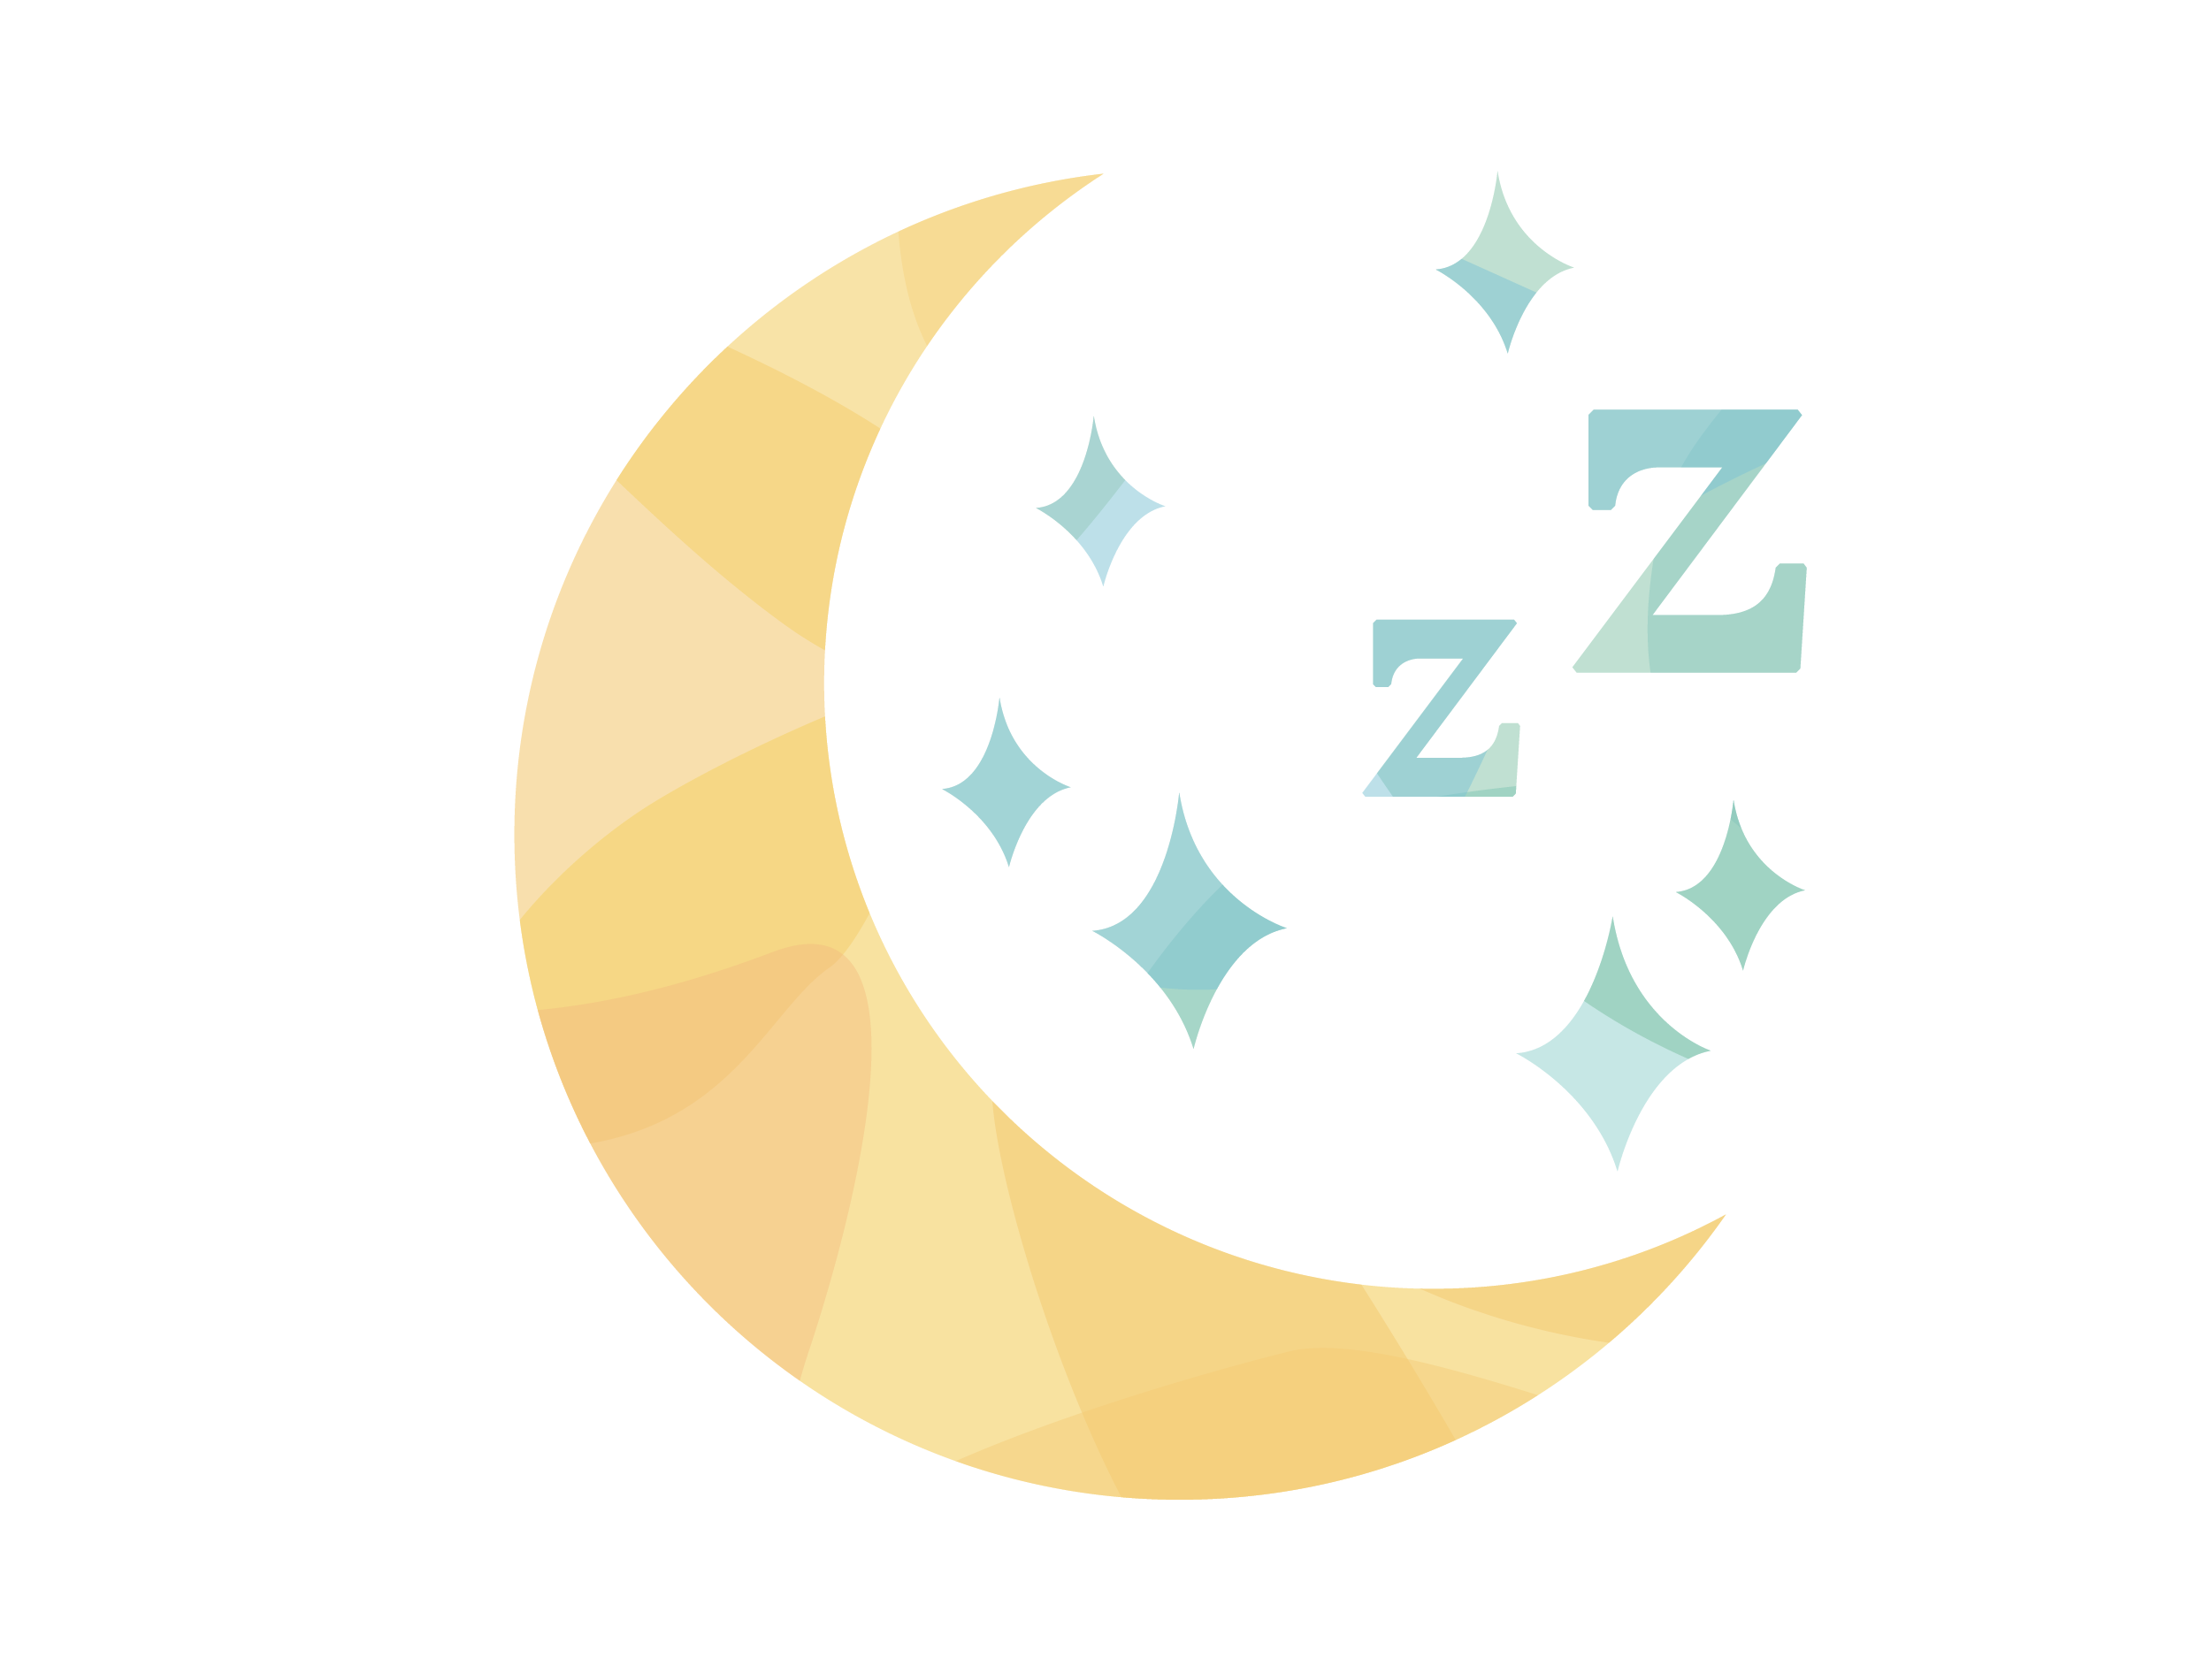 Crescent moon and sleep z's illustration